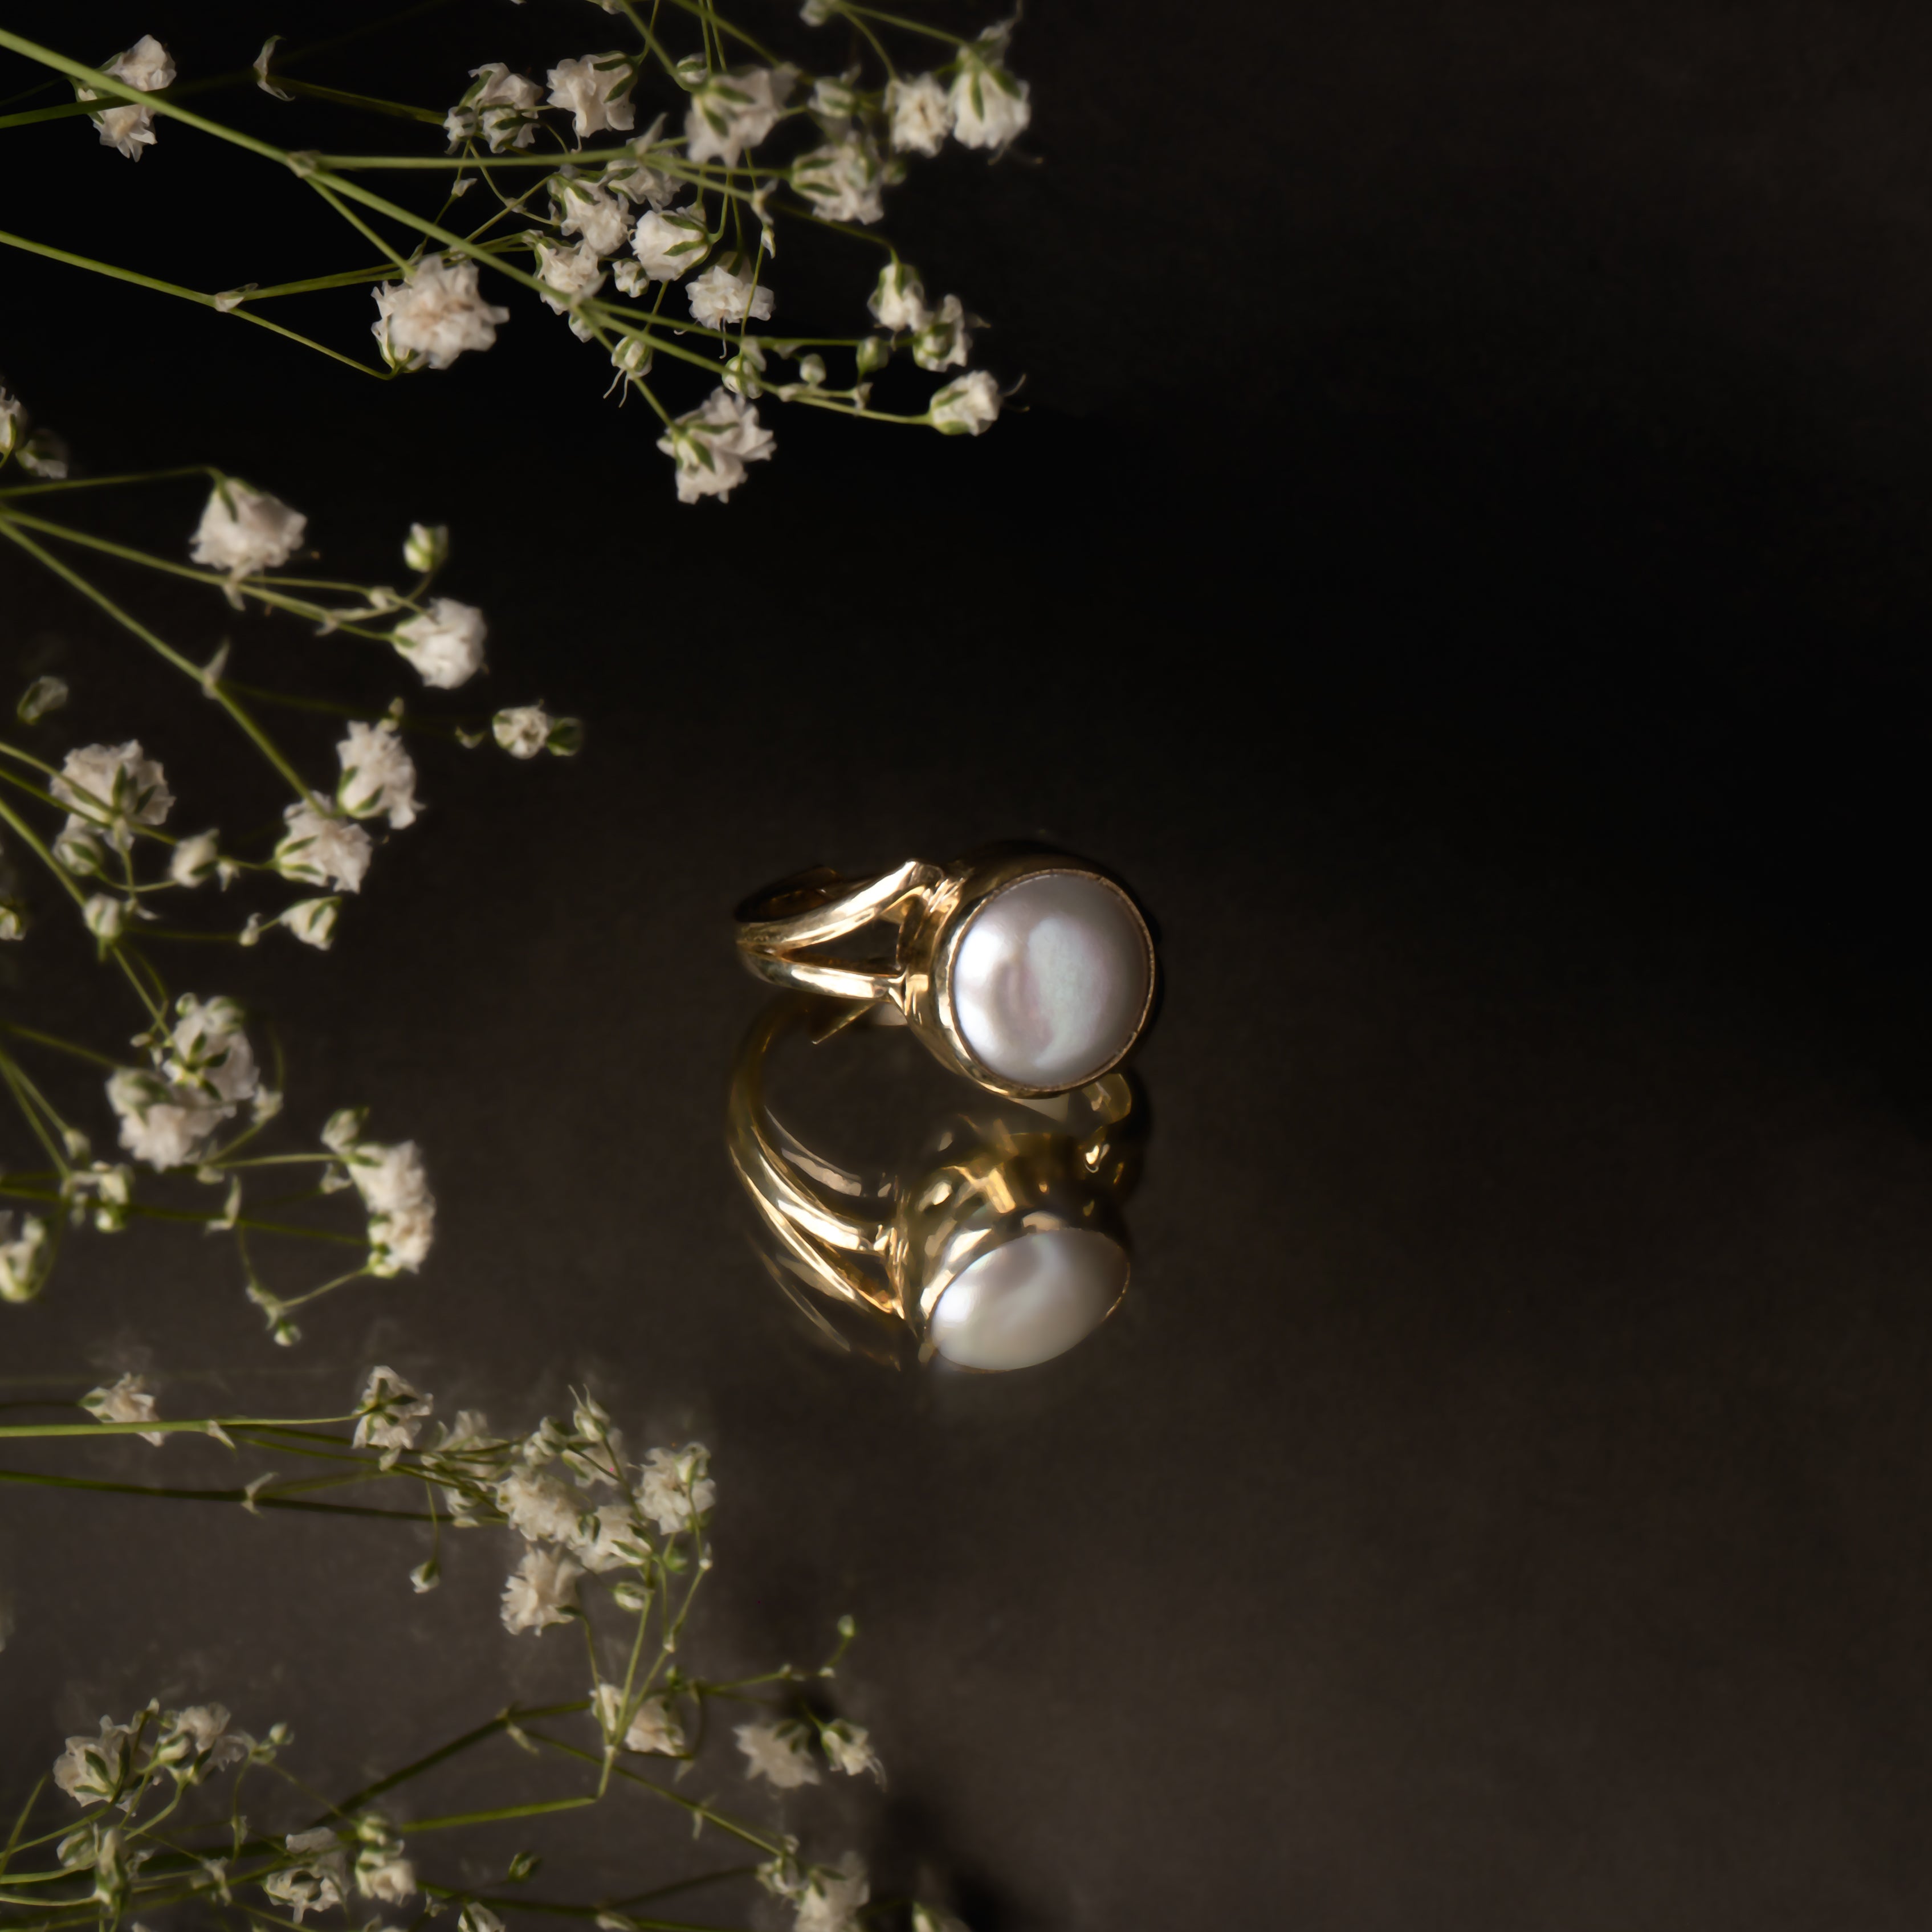 Pearl Stone Benefits: Why You Should Wear Moti, Expert Weighs In |  HerZindagi